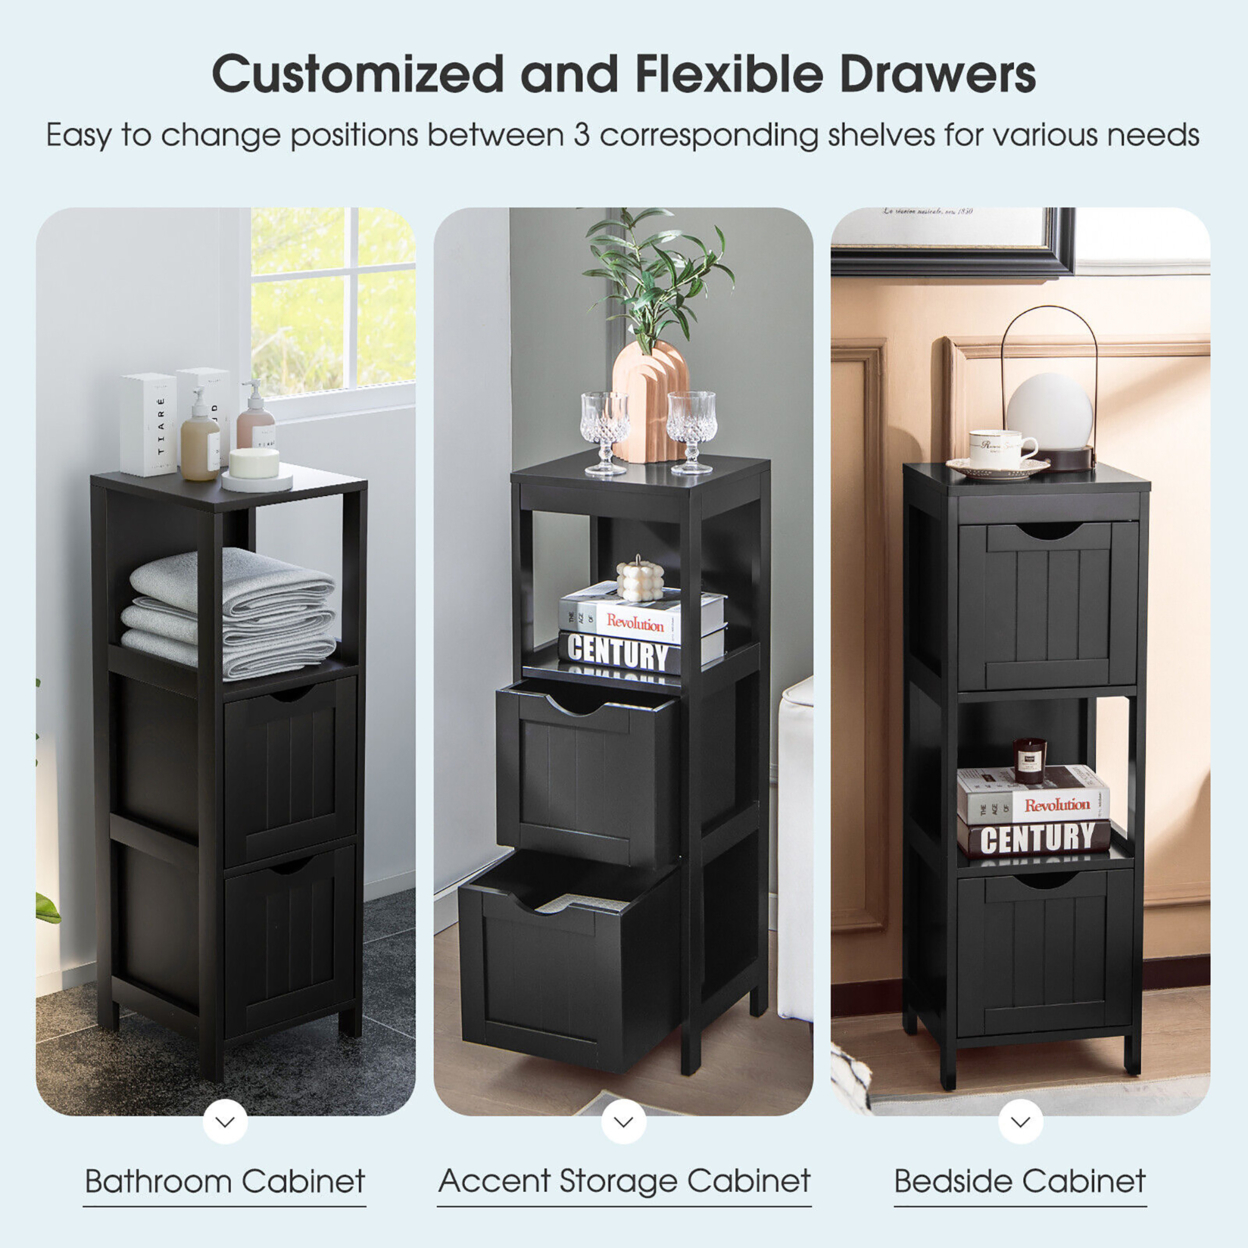 Bathroom Floor Cabinet Side Wooden Storage Organizer W/ Removable Drawers - Brown